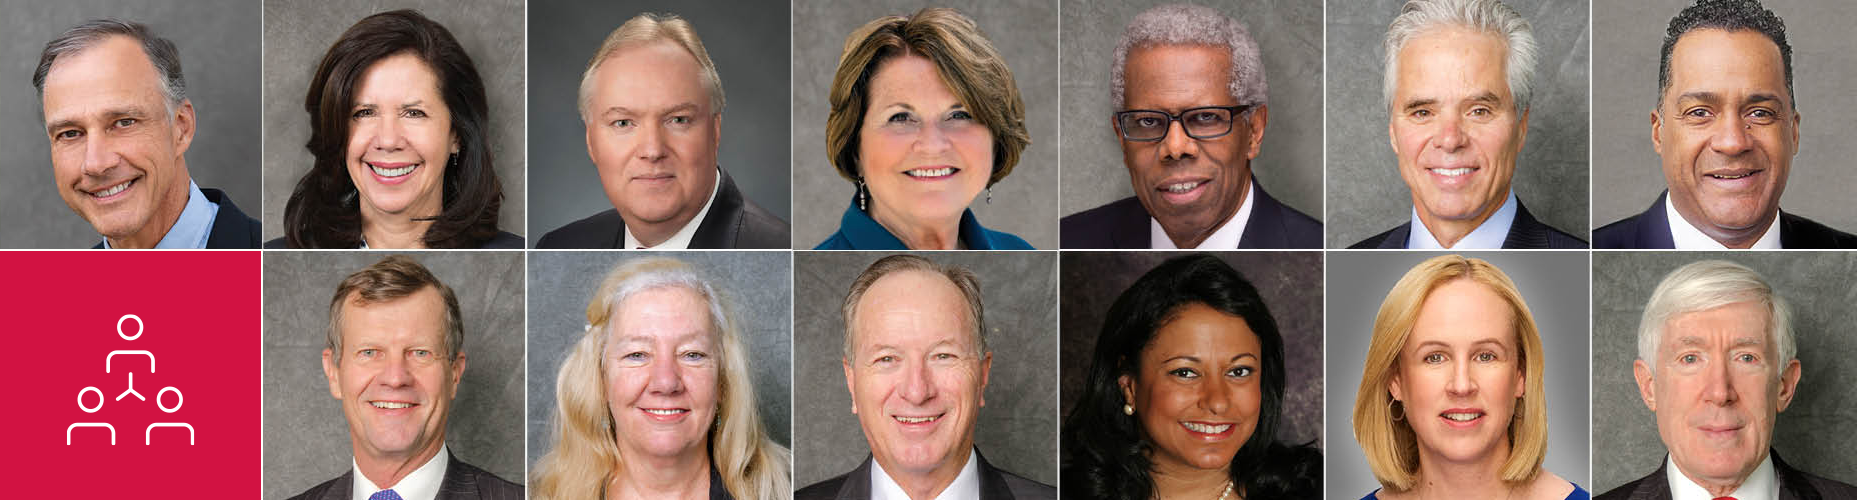 Board of directors diversity